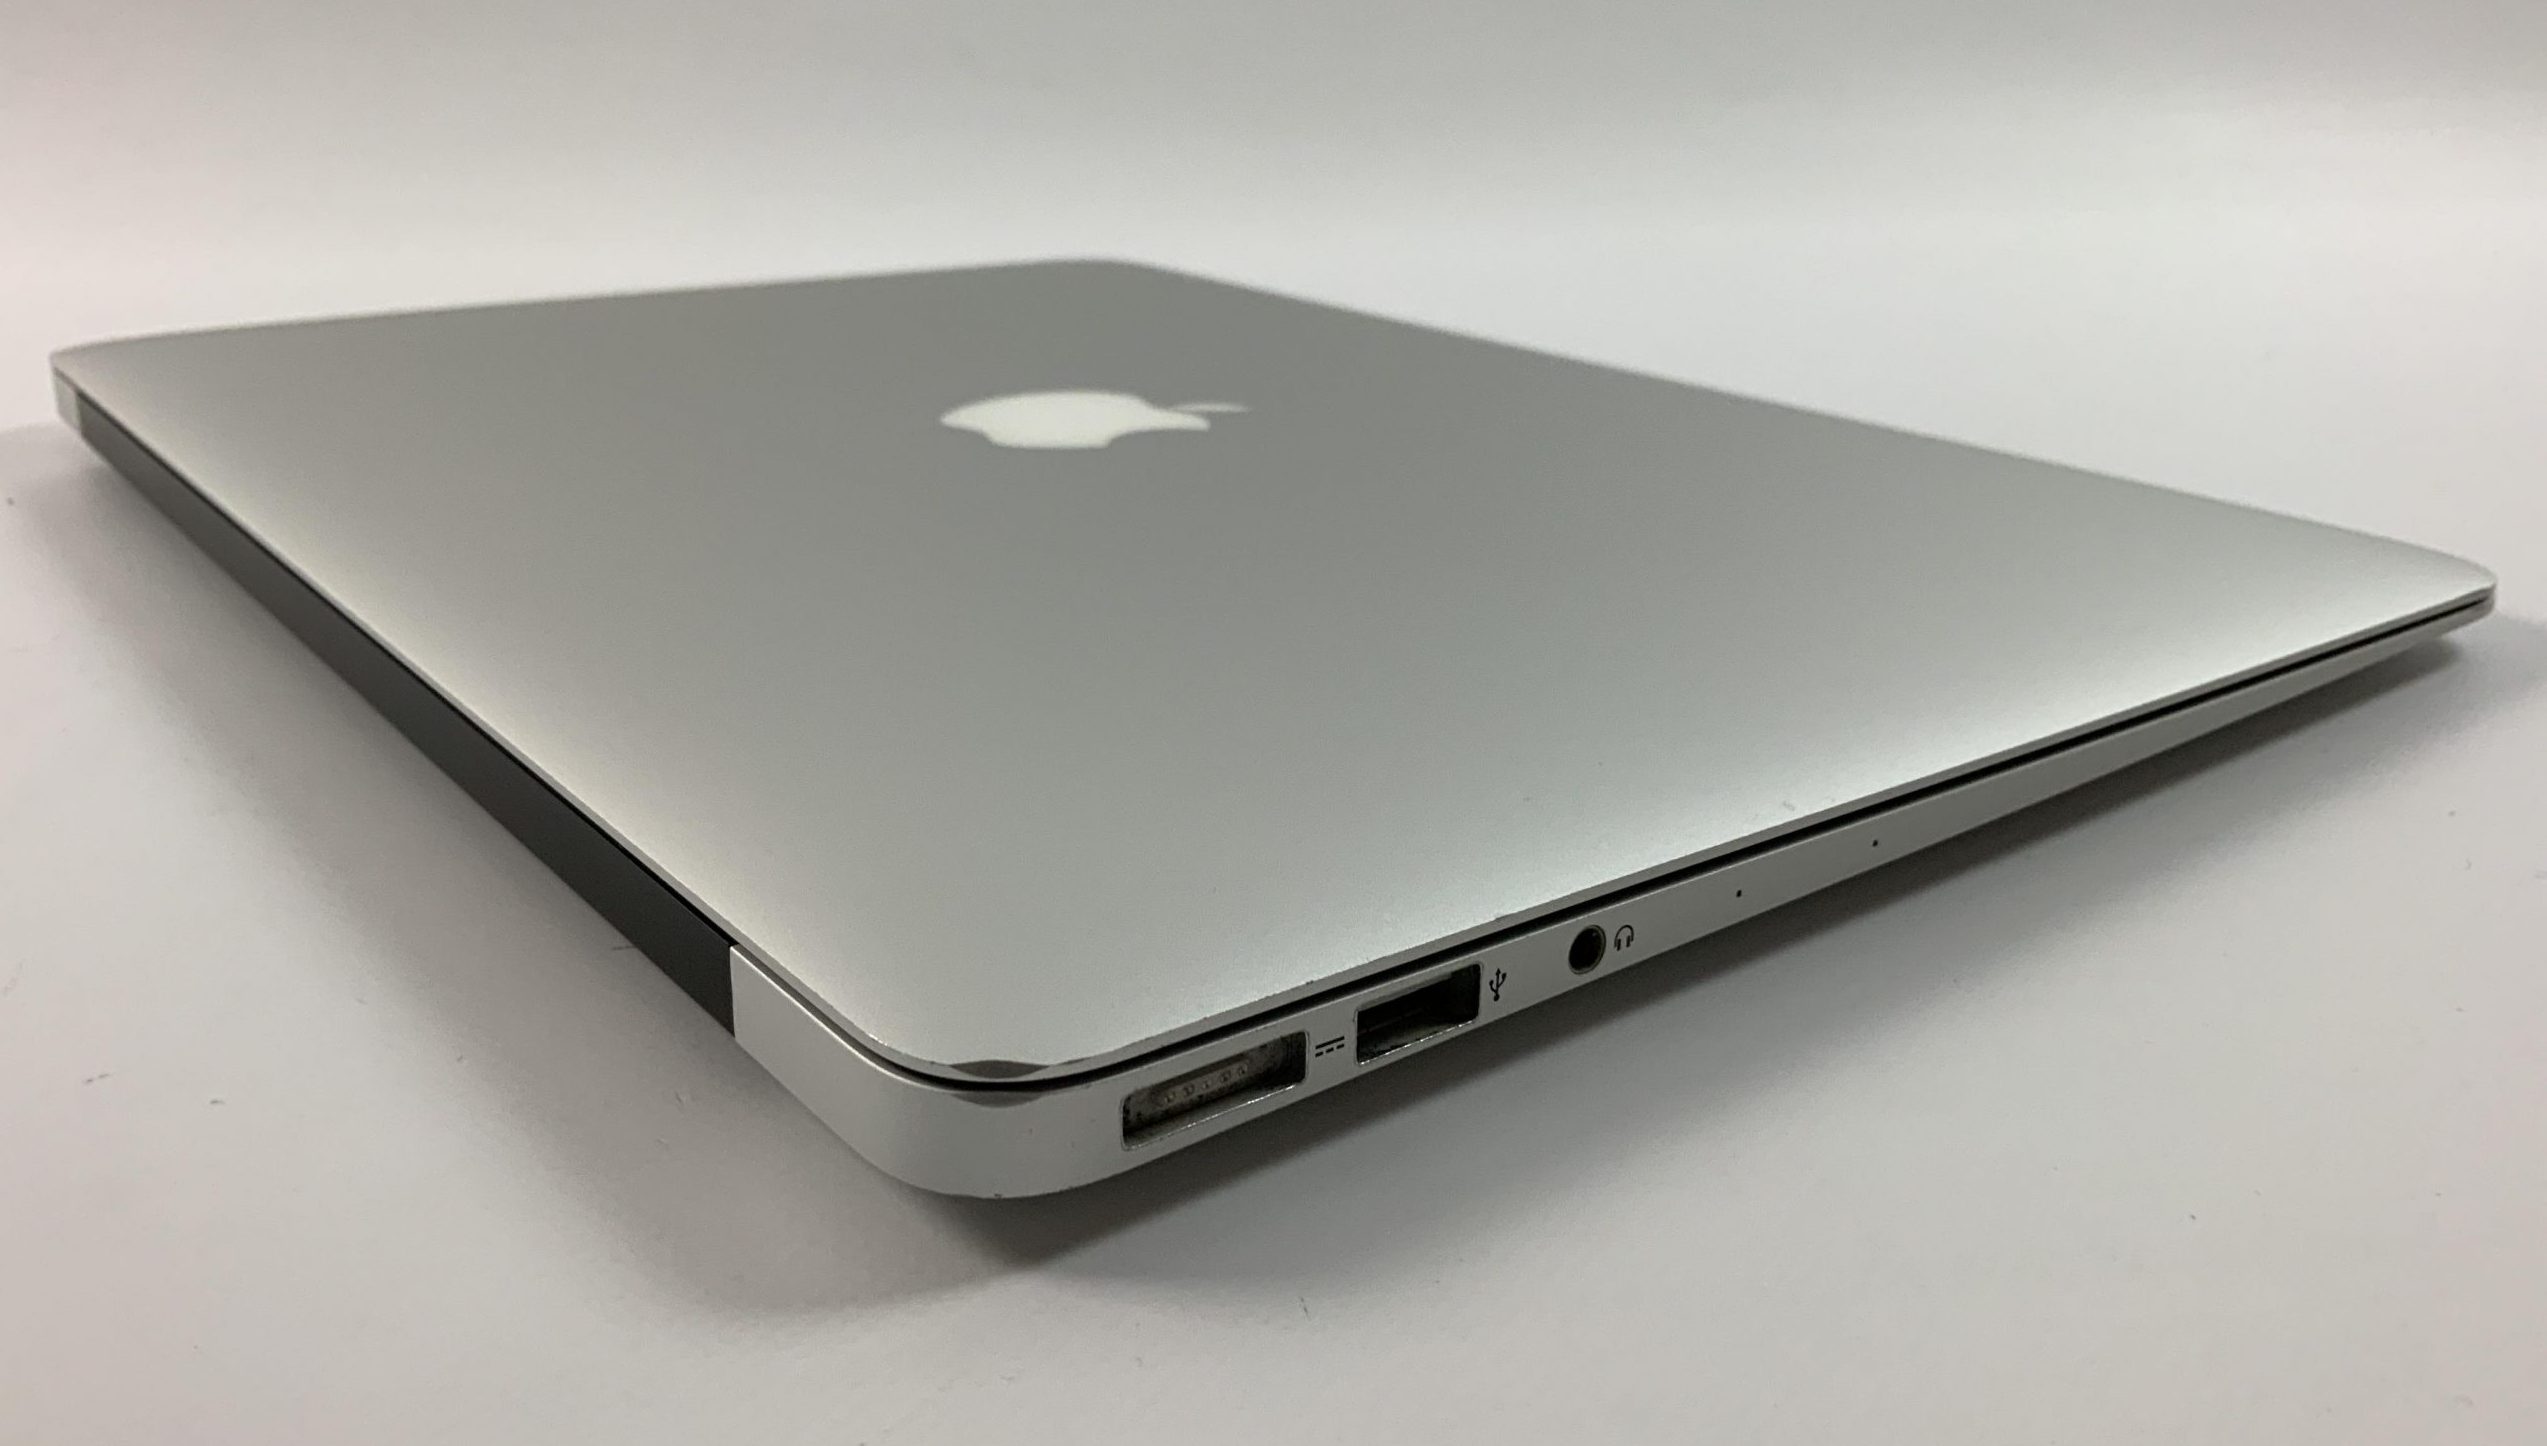 MacBook Air 13" Early 2014 (Intel Core i5 1.4 GHz 8 GB RAM 512 GB SSD), Intel Core i5 1.4 GHz, 8 GB RAM, 512 GB SSD, bild 3